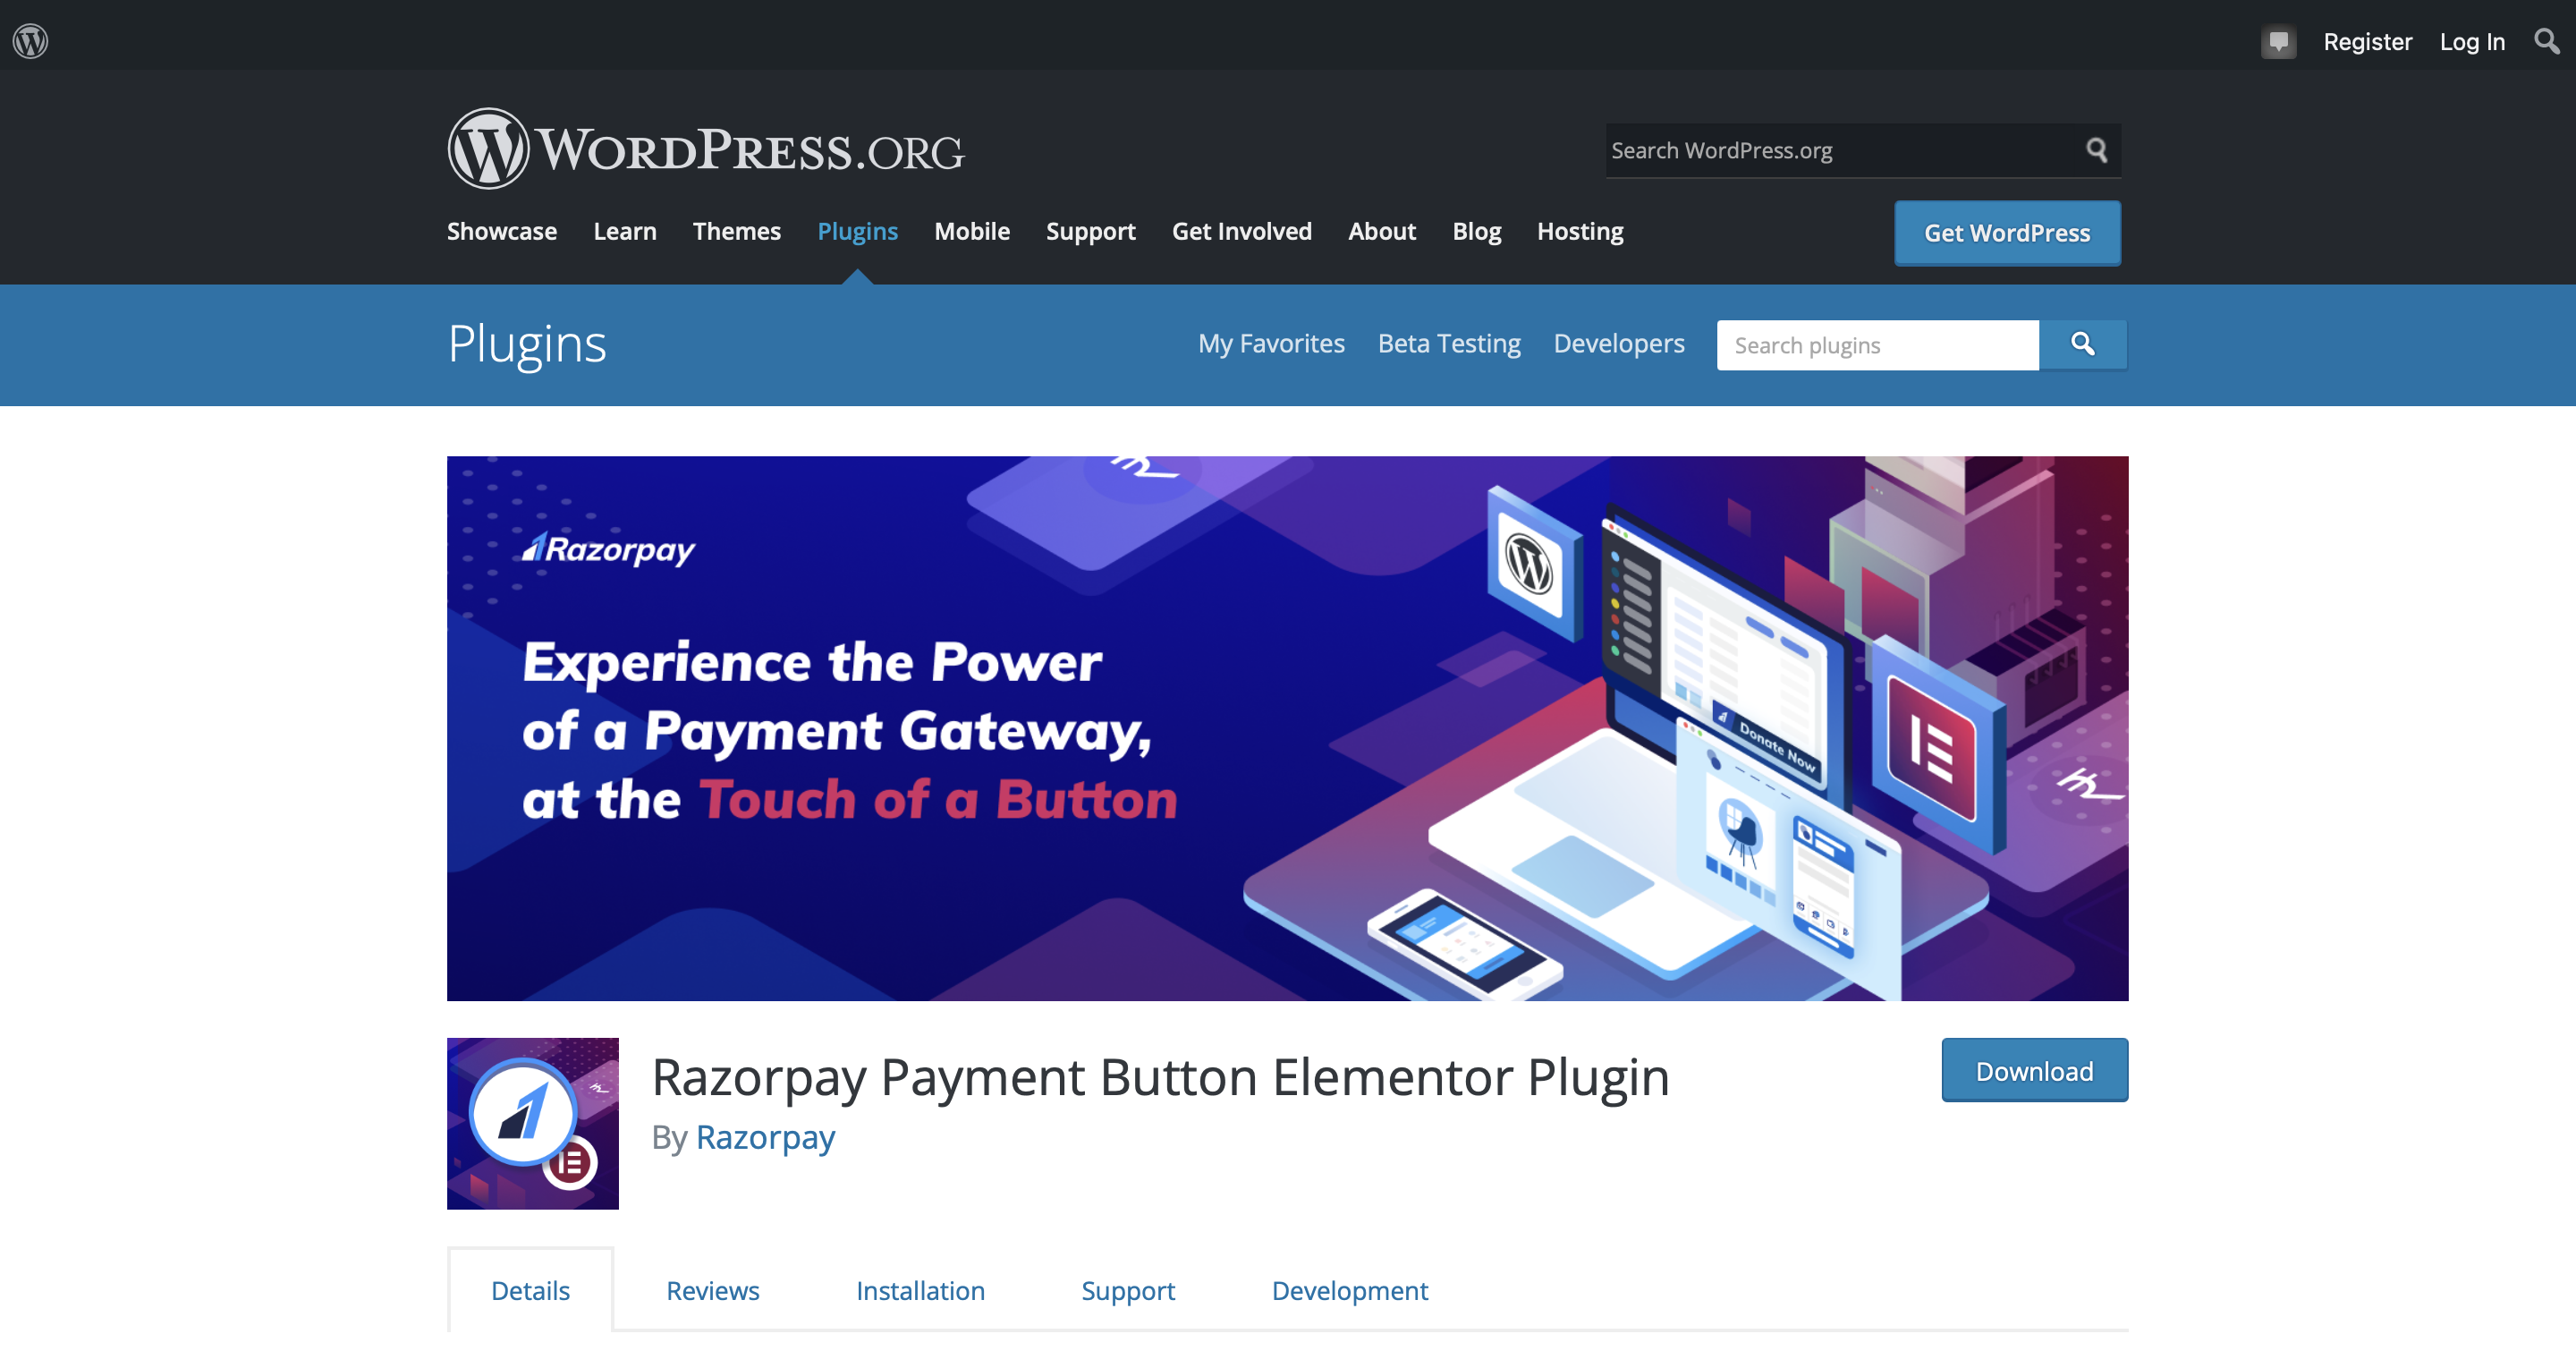 Razorpay Payment Button Elementor Plugin